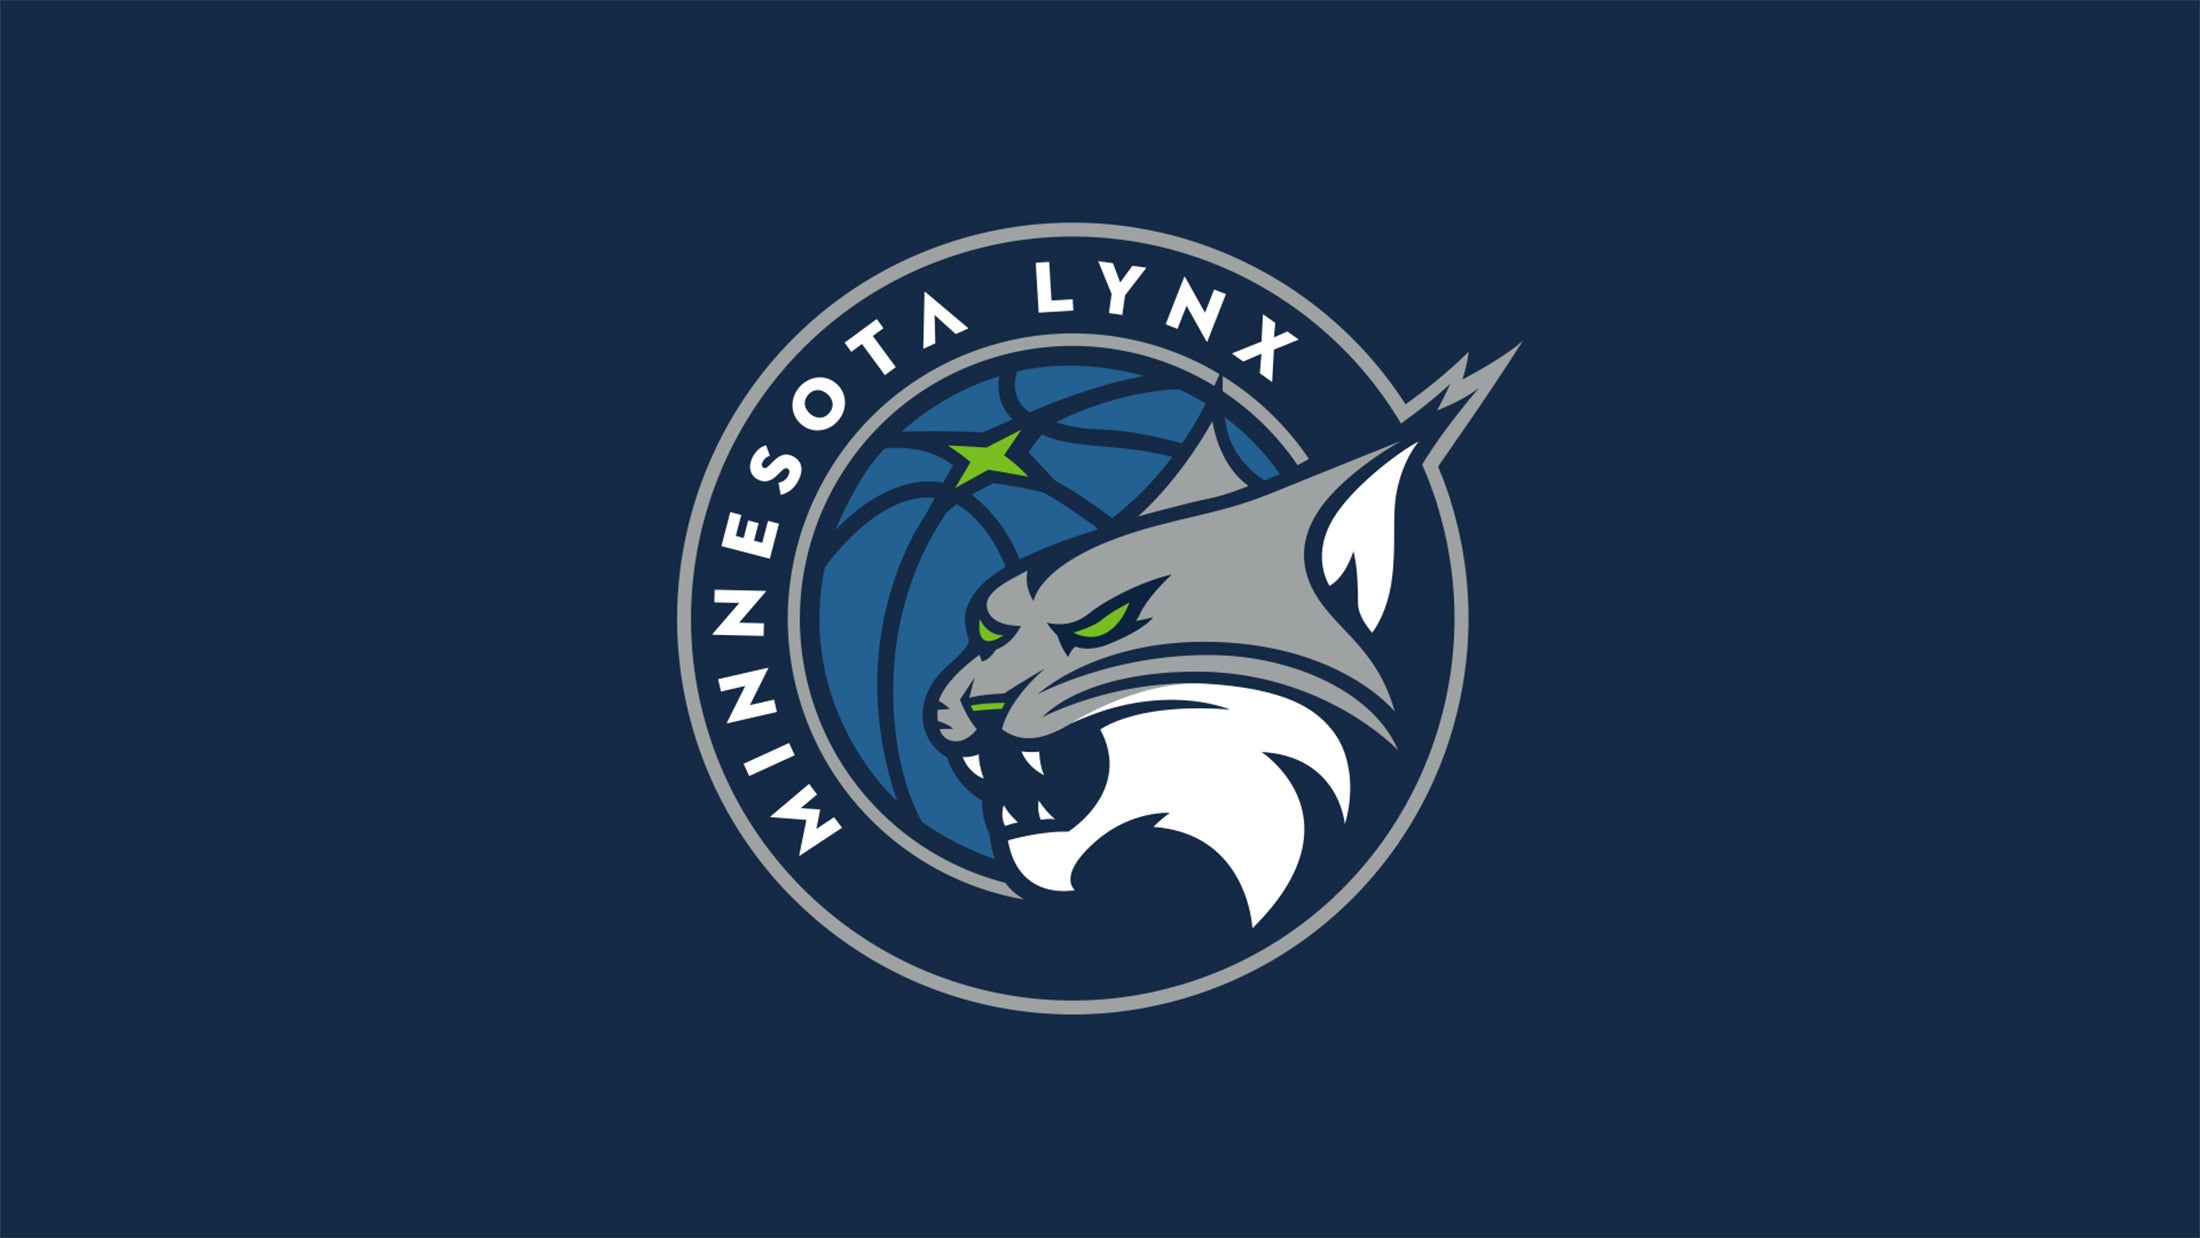 Minnesota Lynx vs. Atlanta Dream at Target Center